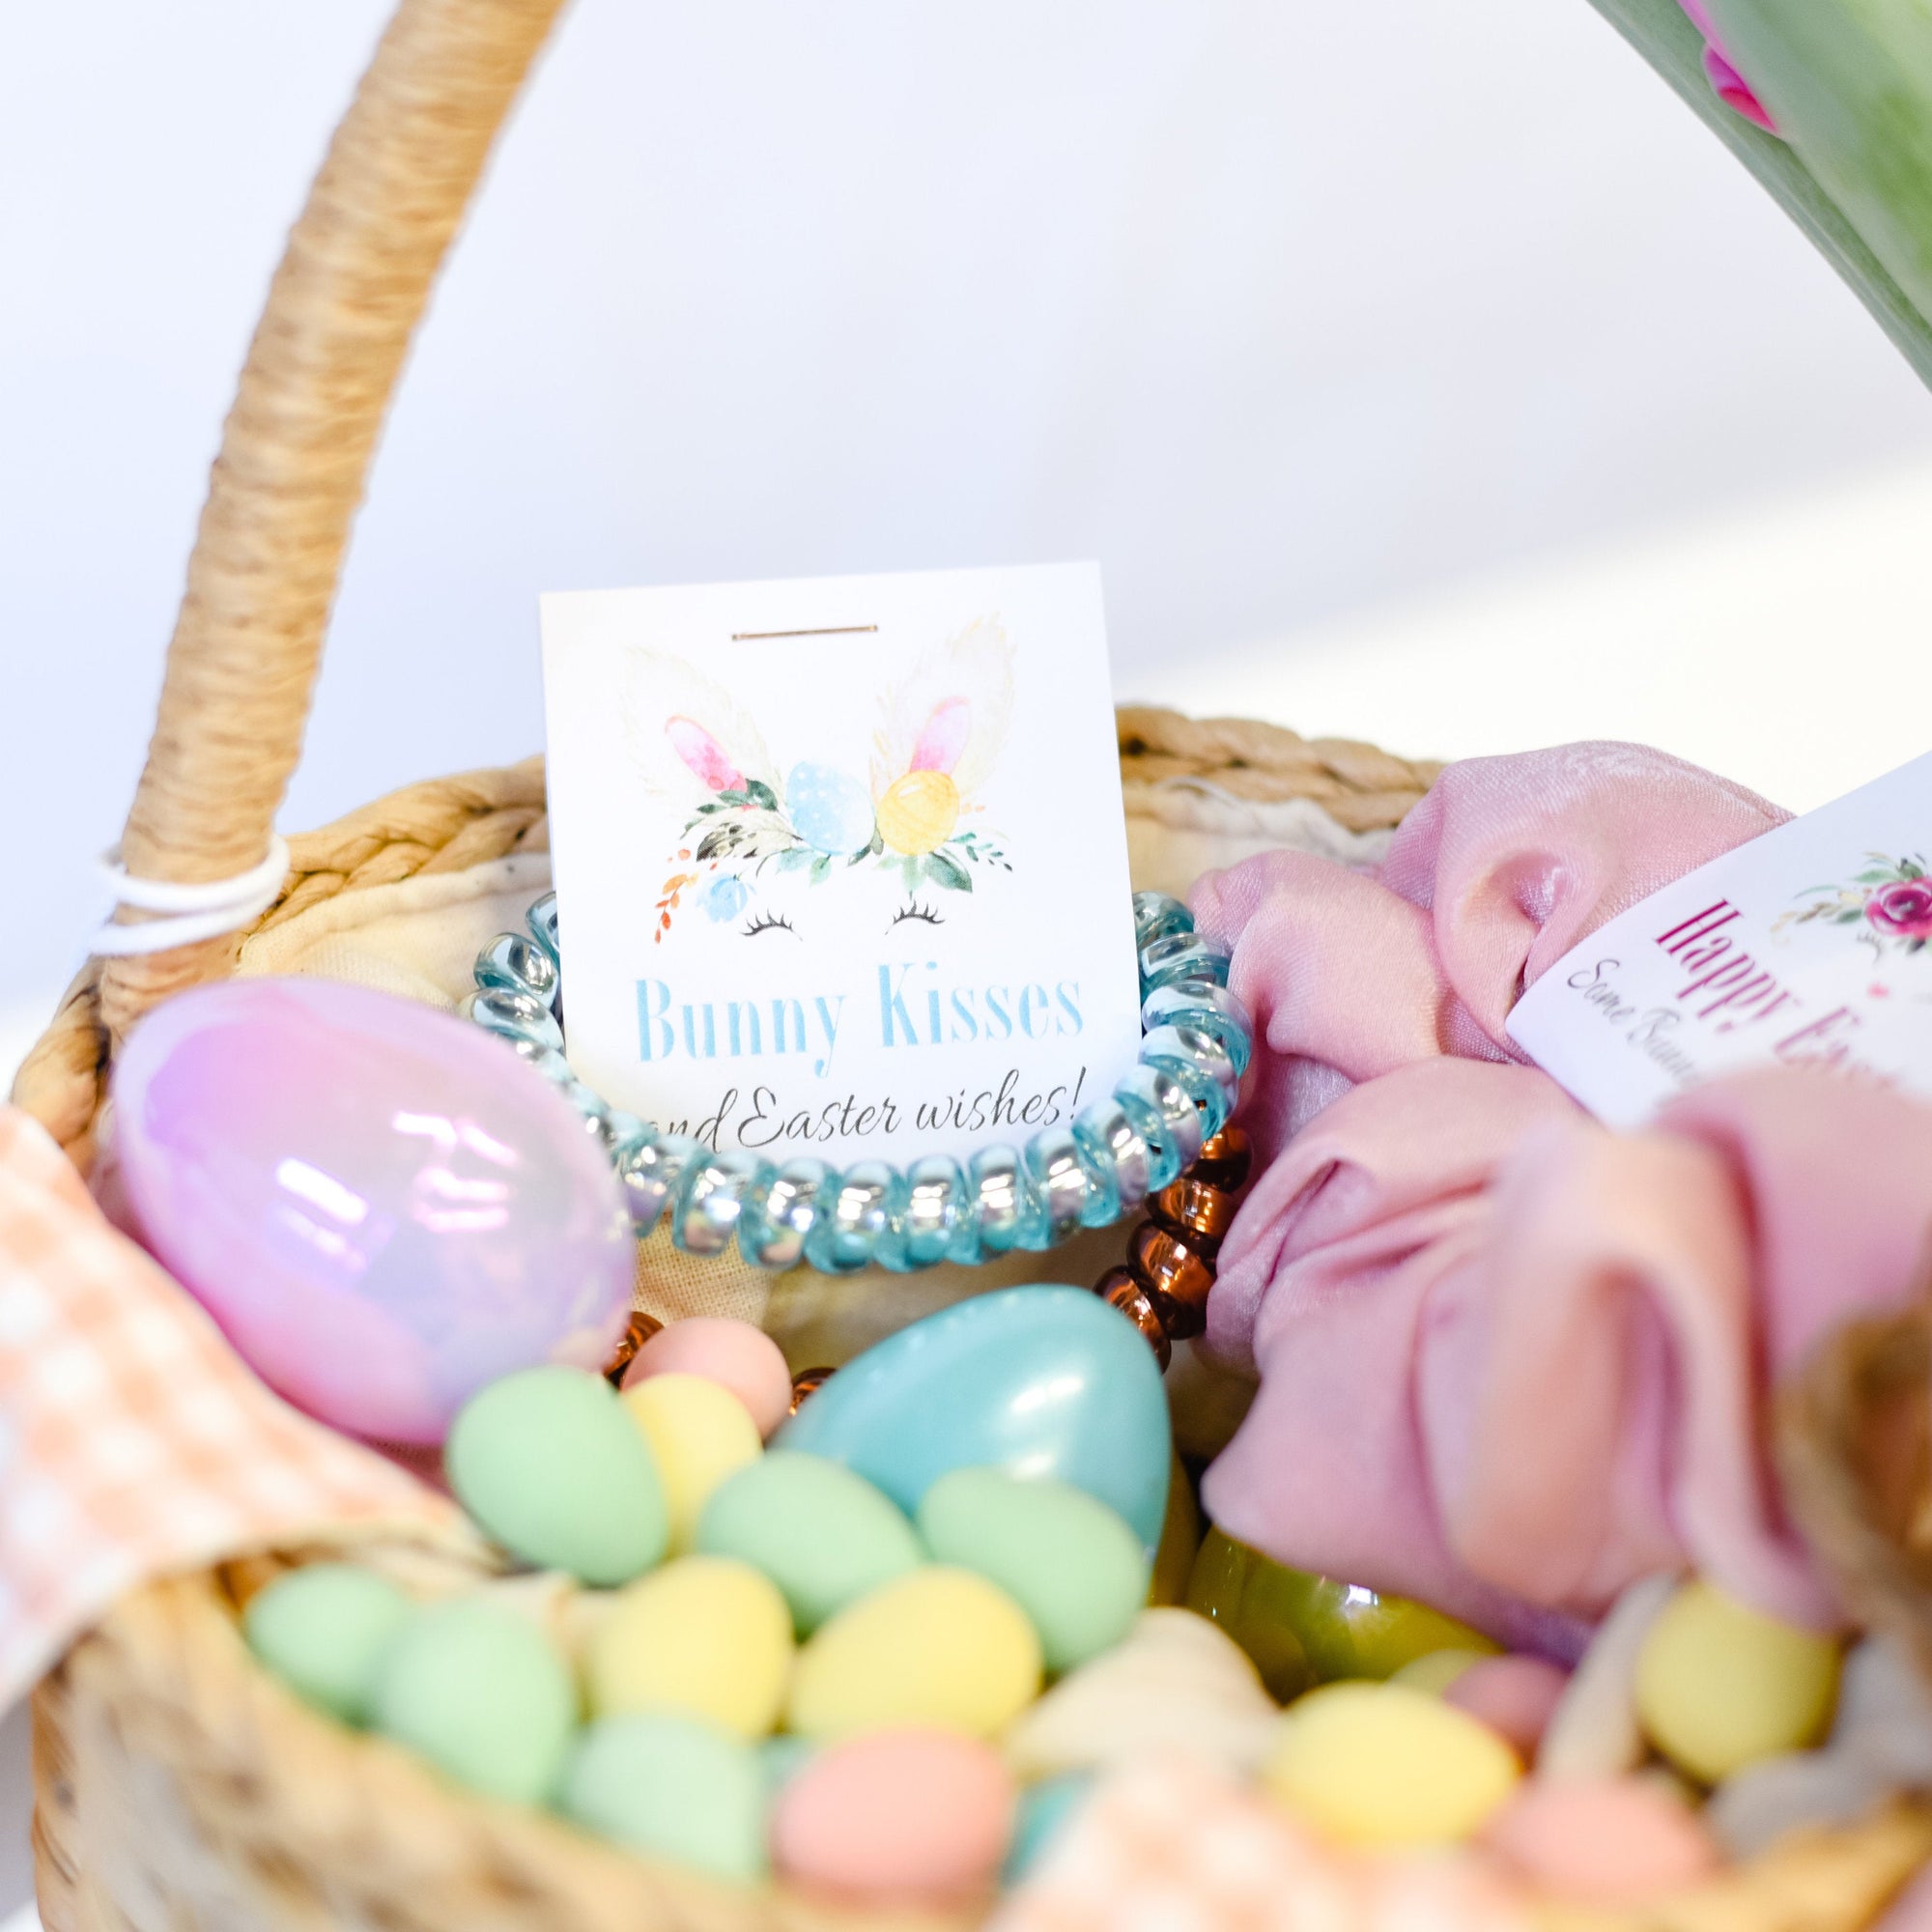 Easter Favors, Spiral Hair Ties, Easter Gift Ideas, Easter Basket Stuffers - @PlumPolkaDot 